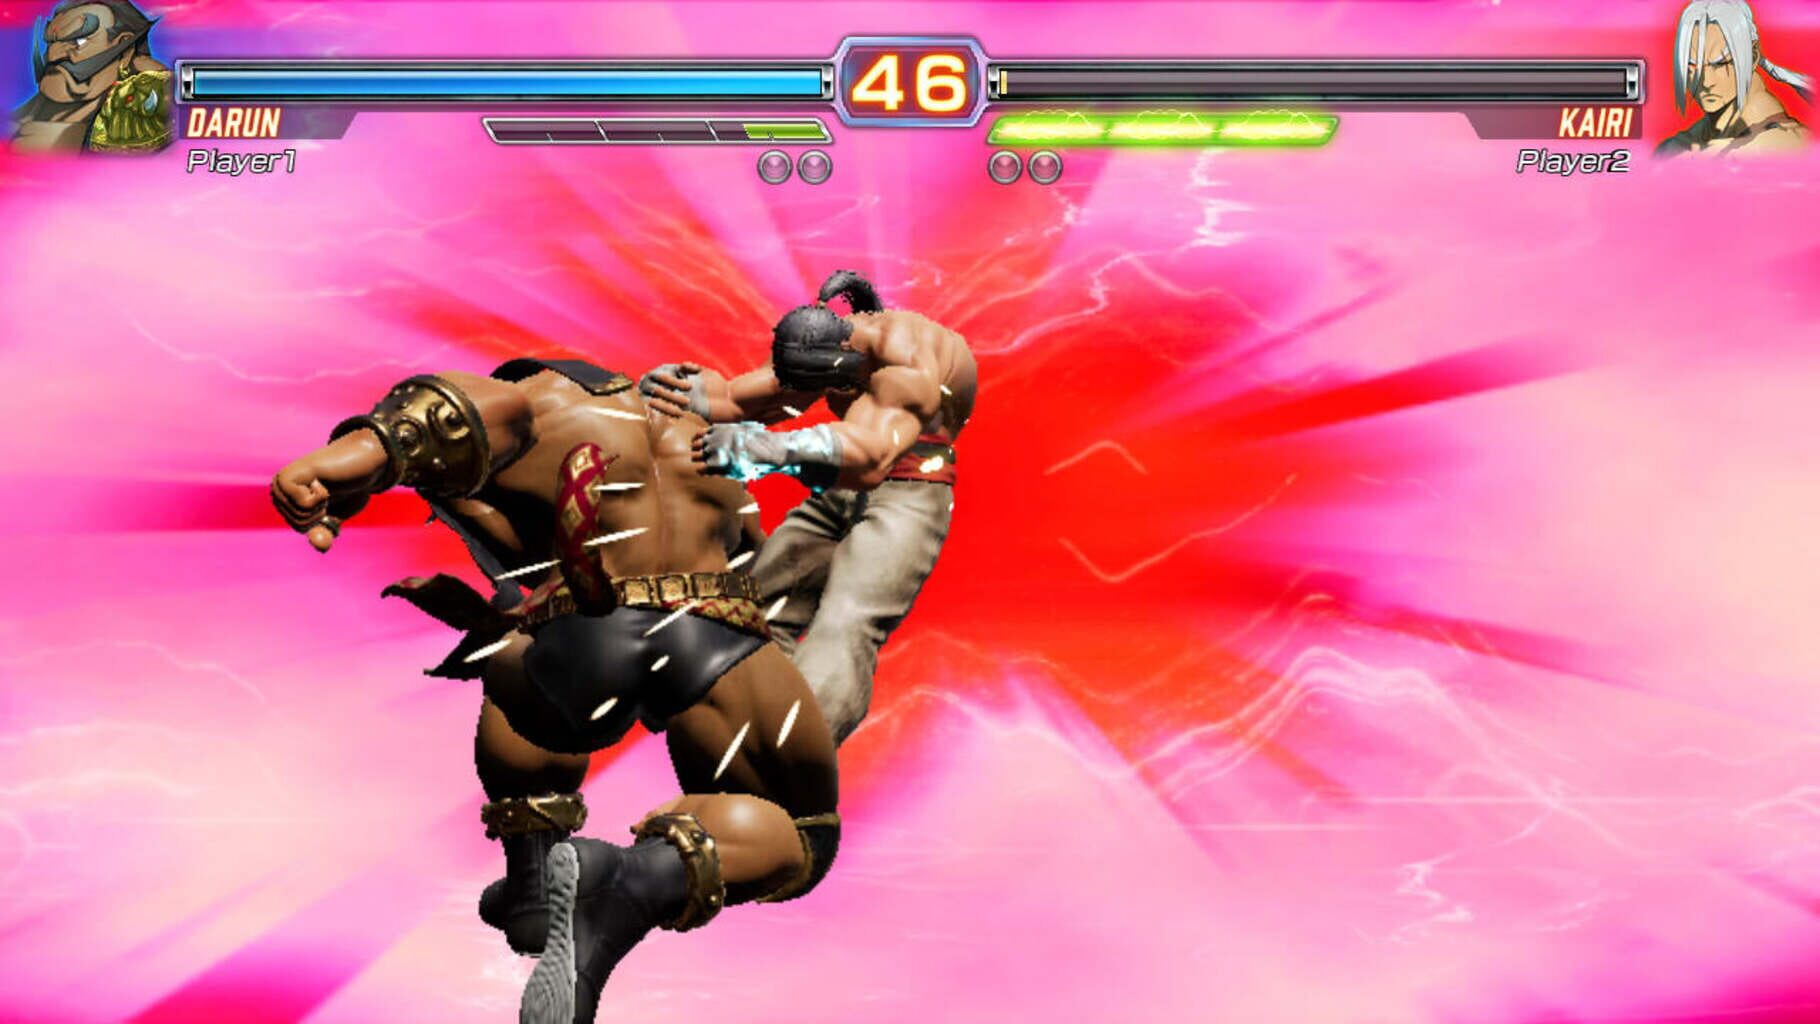 Fighting Ex Layer Another Dash screenshot